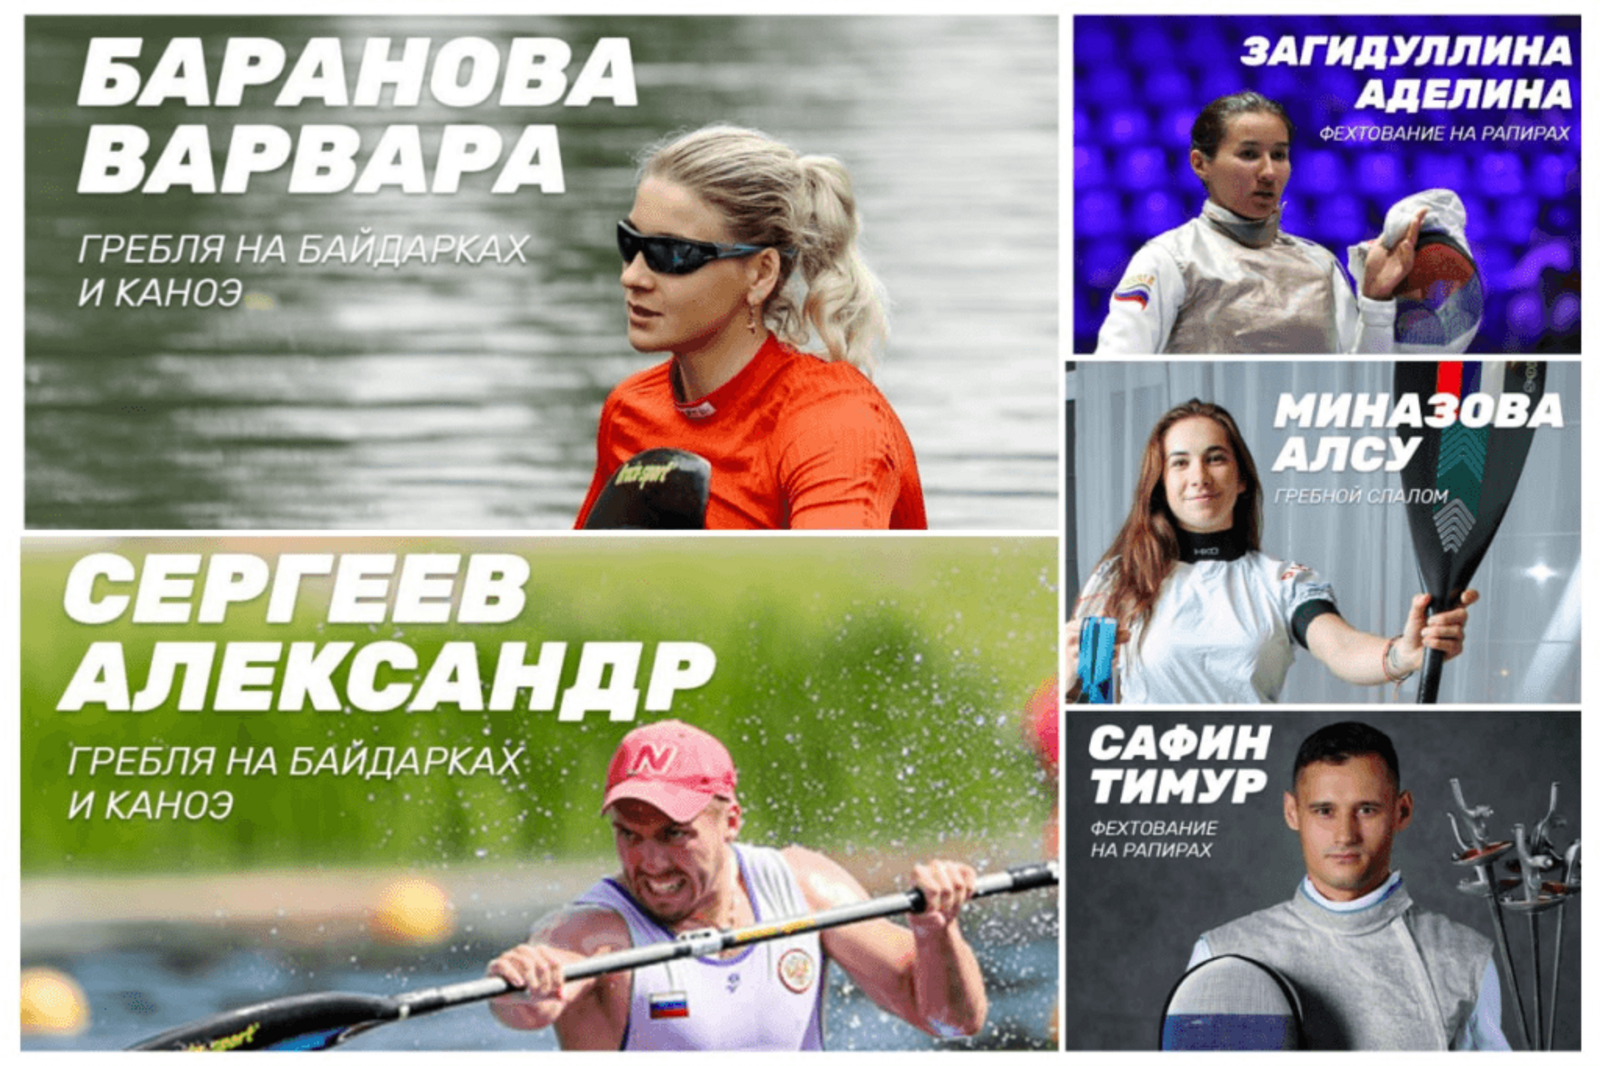 Республику Башкортостан на Олимпиаде в Токио представят 5 спортсменов